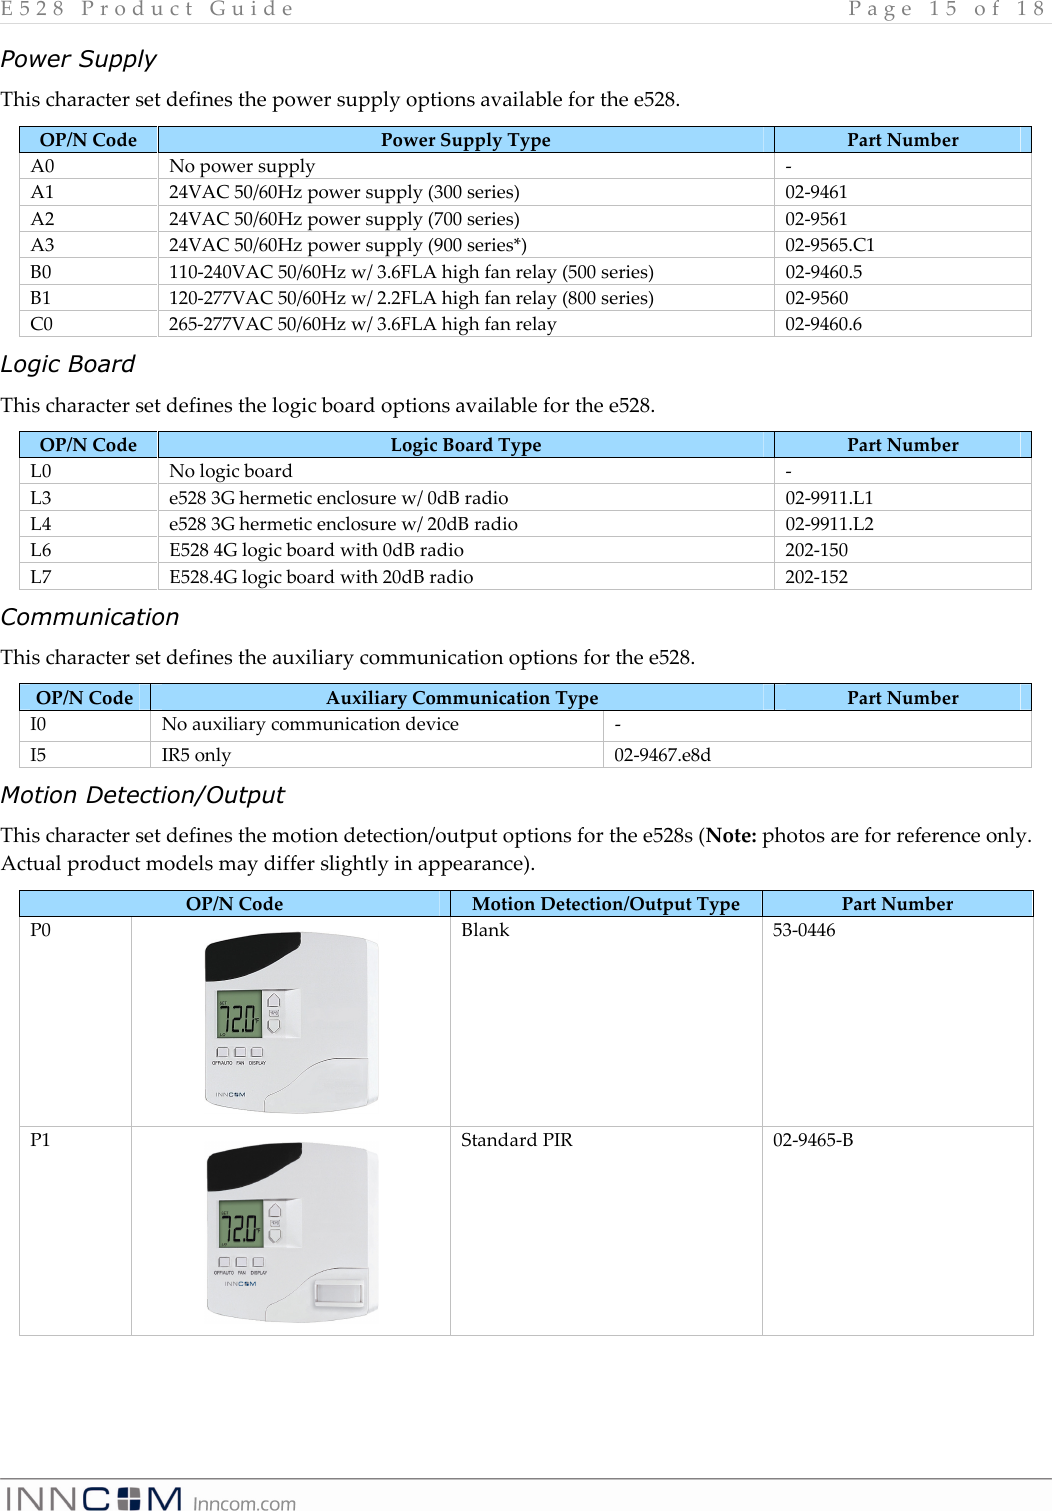 INNCOM 202150TXR Thermostat User Manual E528 Product Guide v7 0 PG